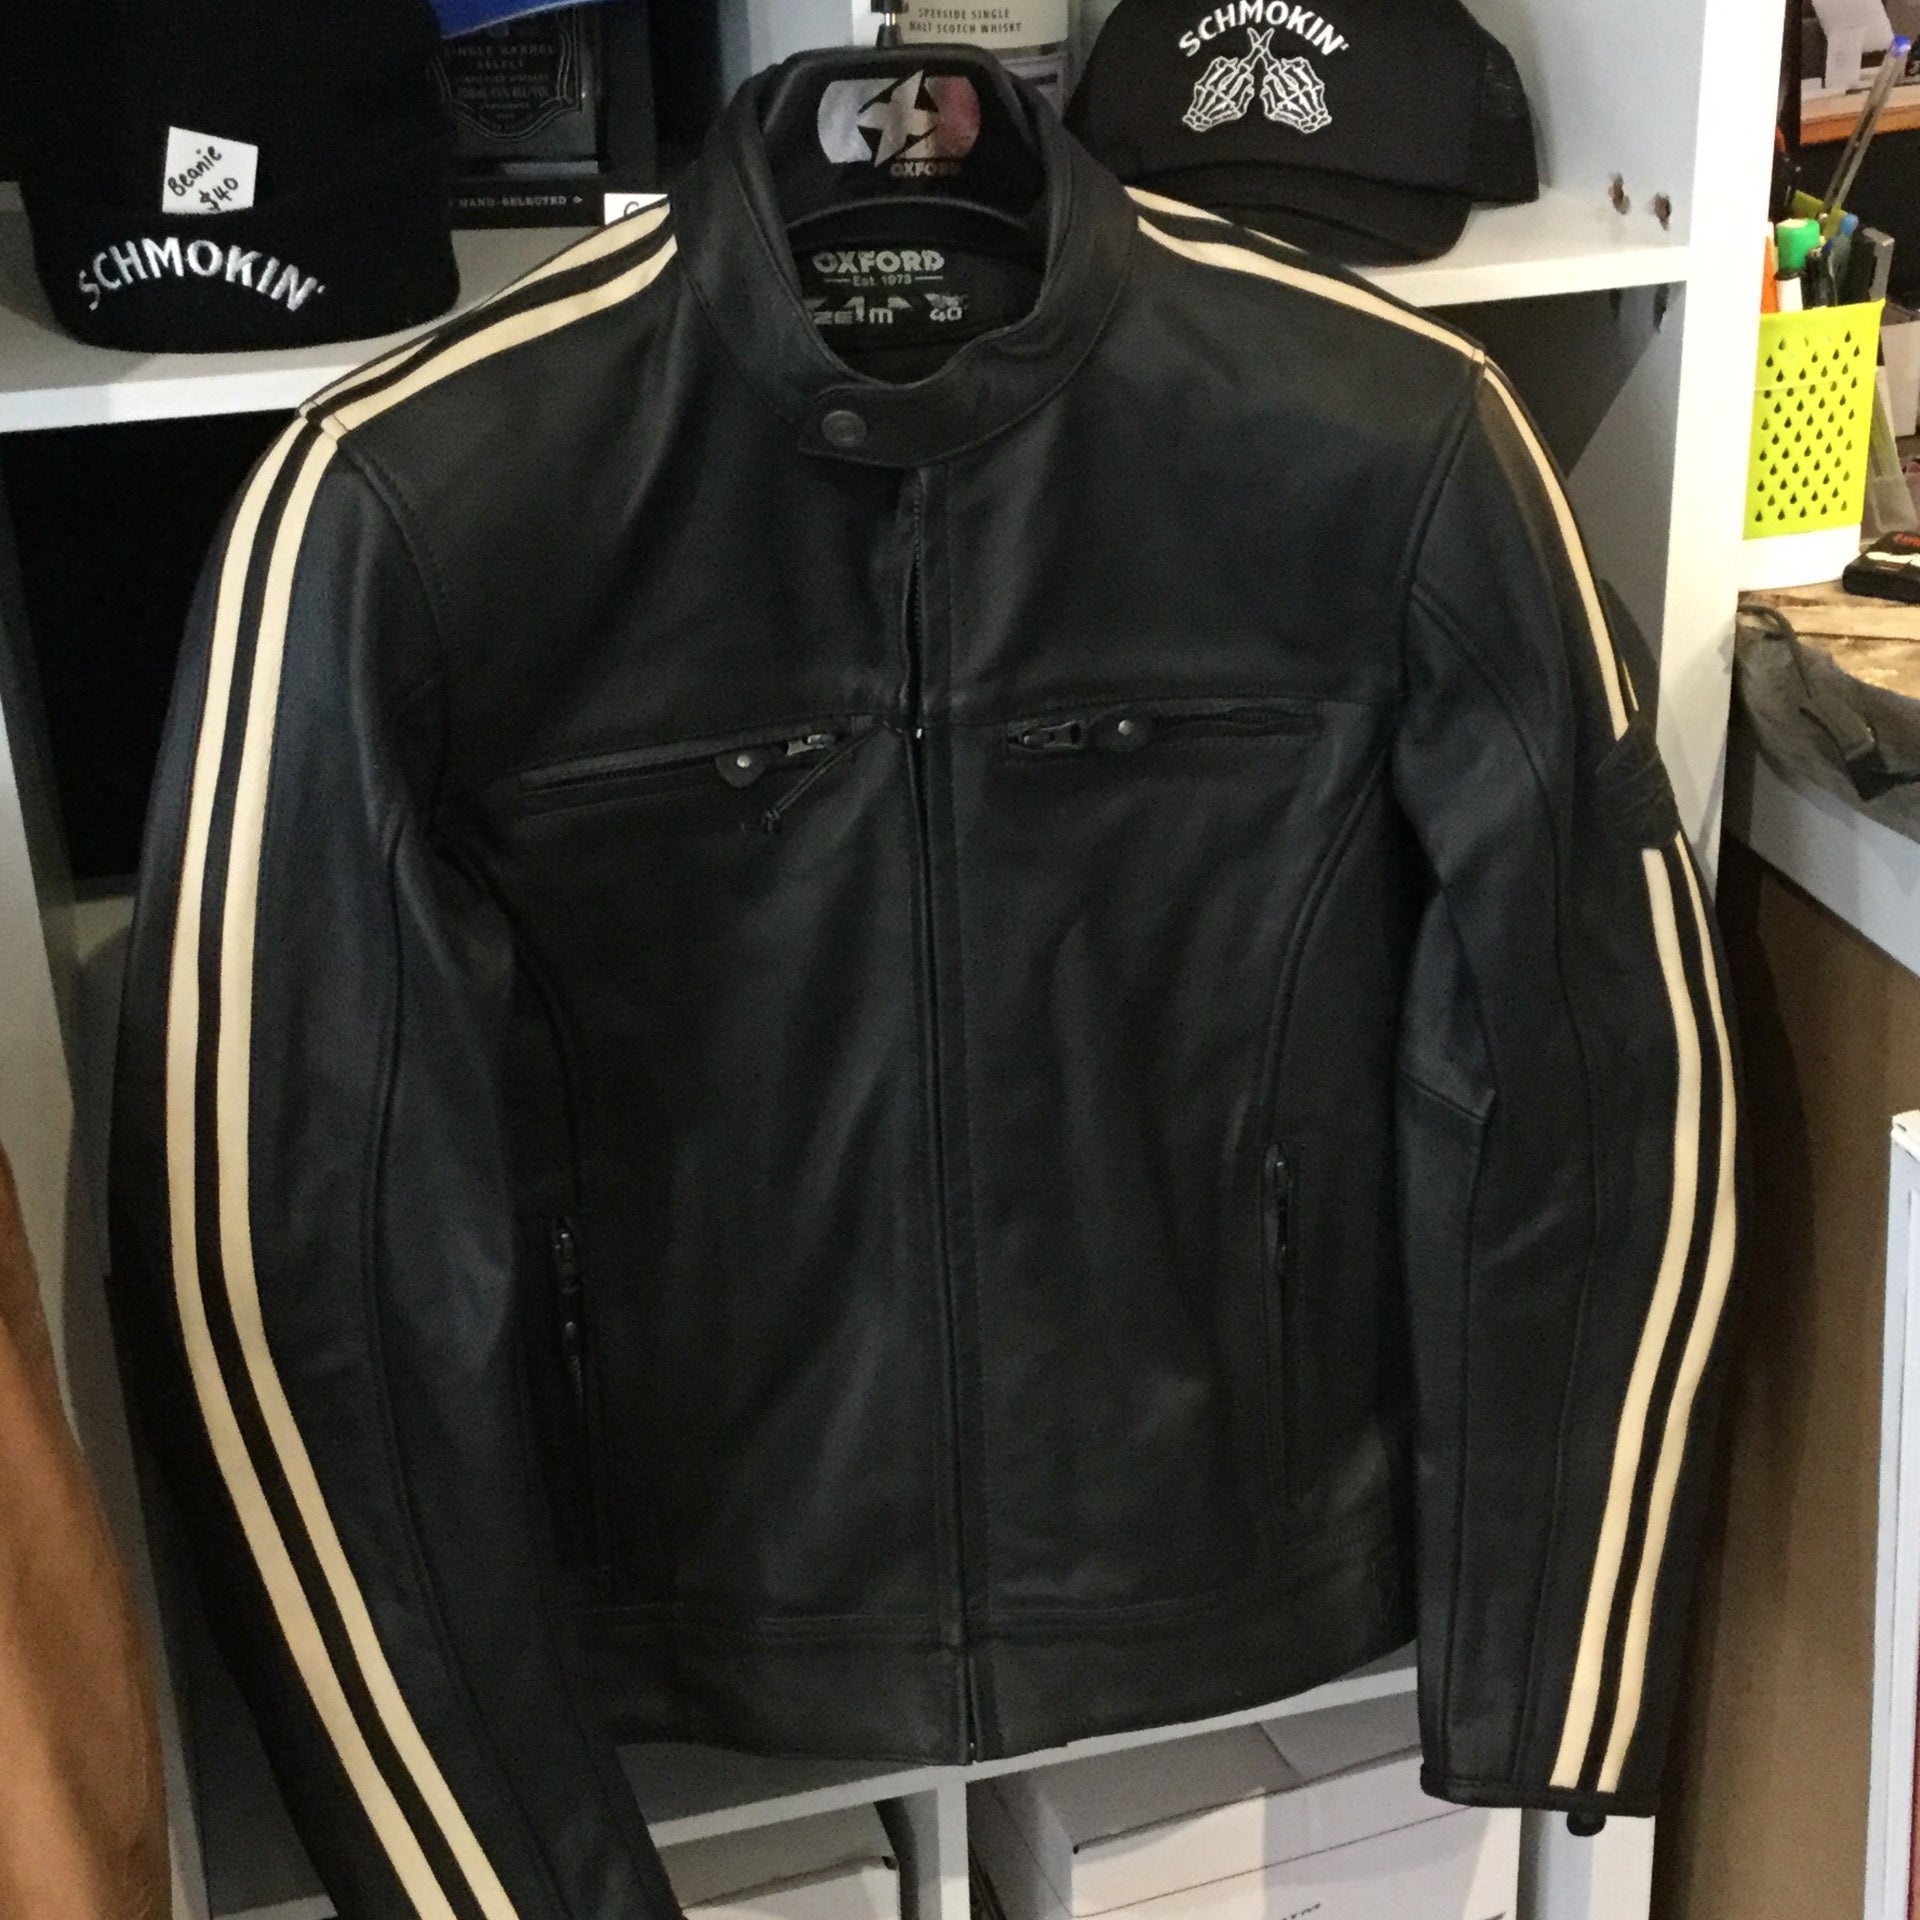 Oxford Bladon Leather Jacket - Black